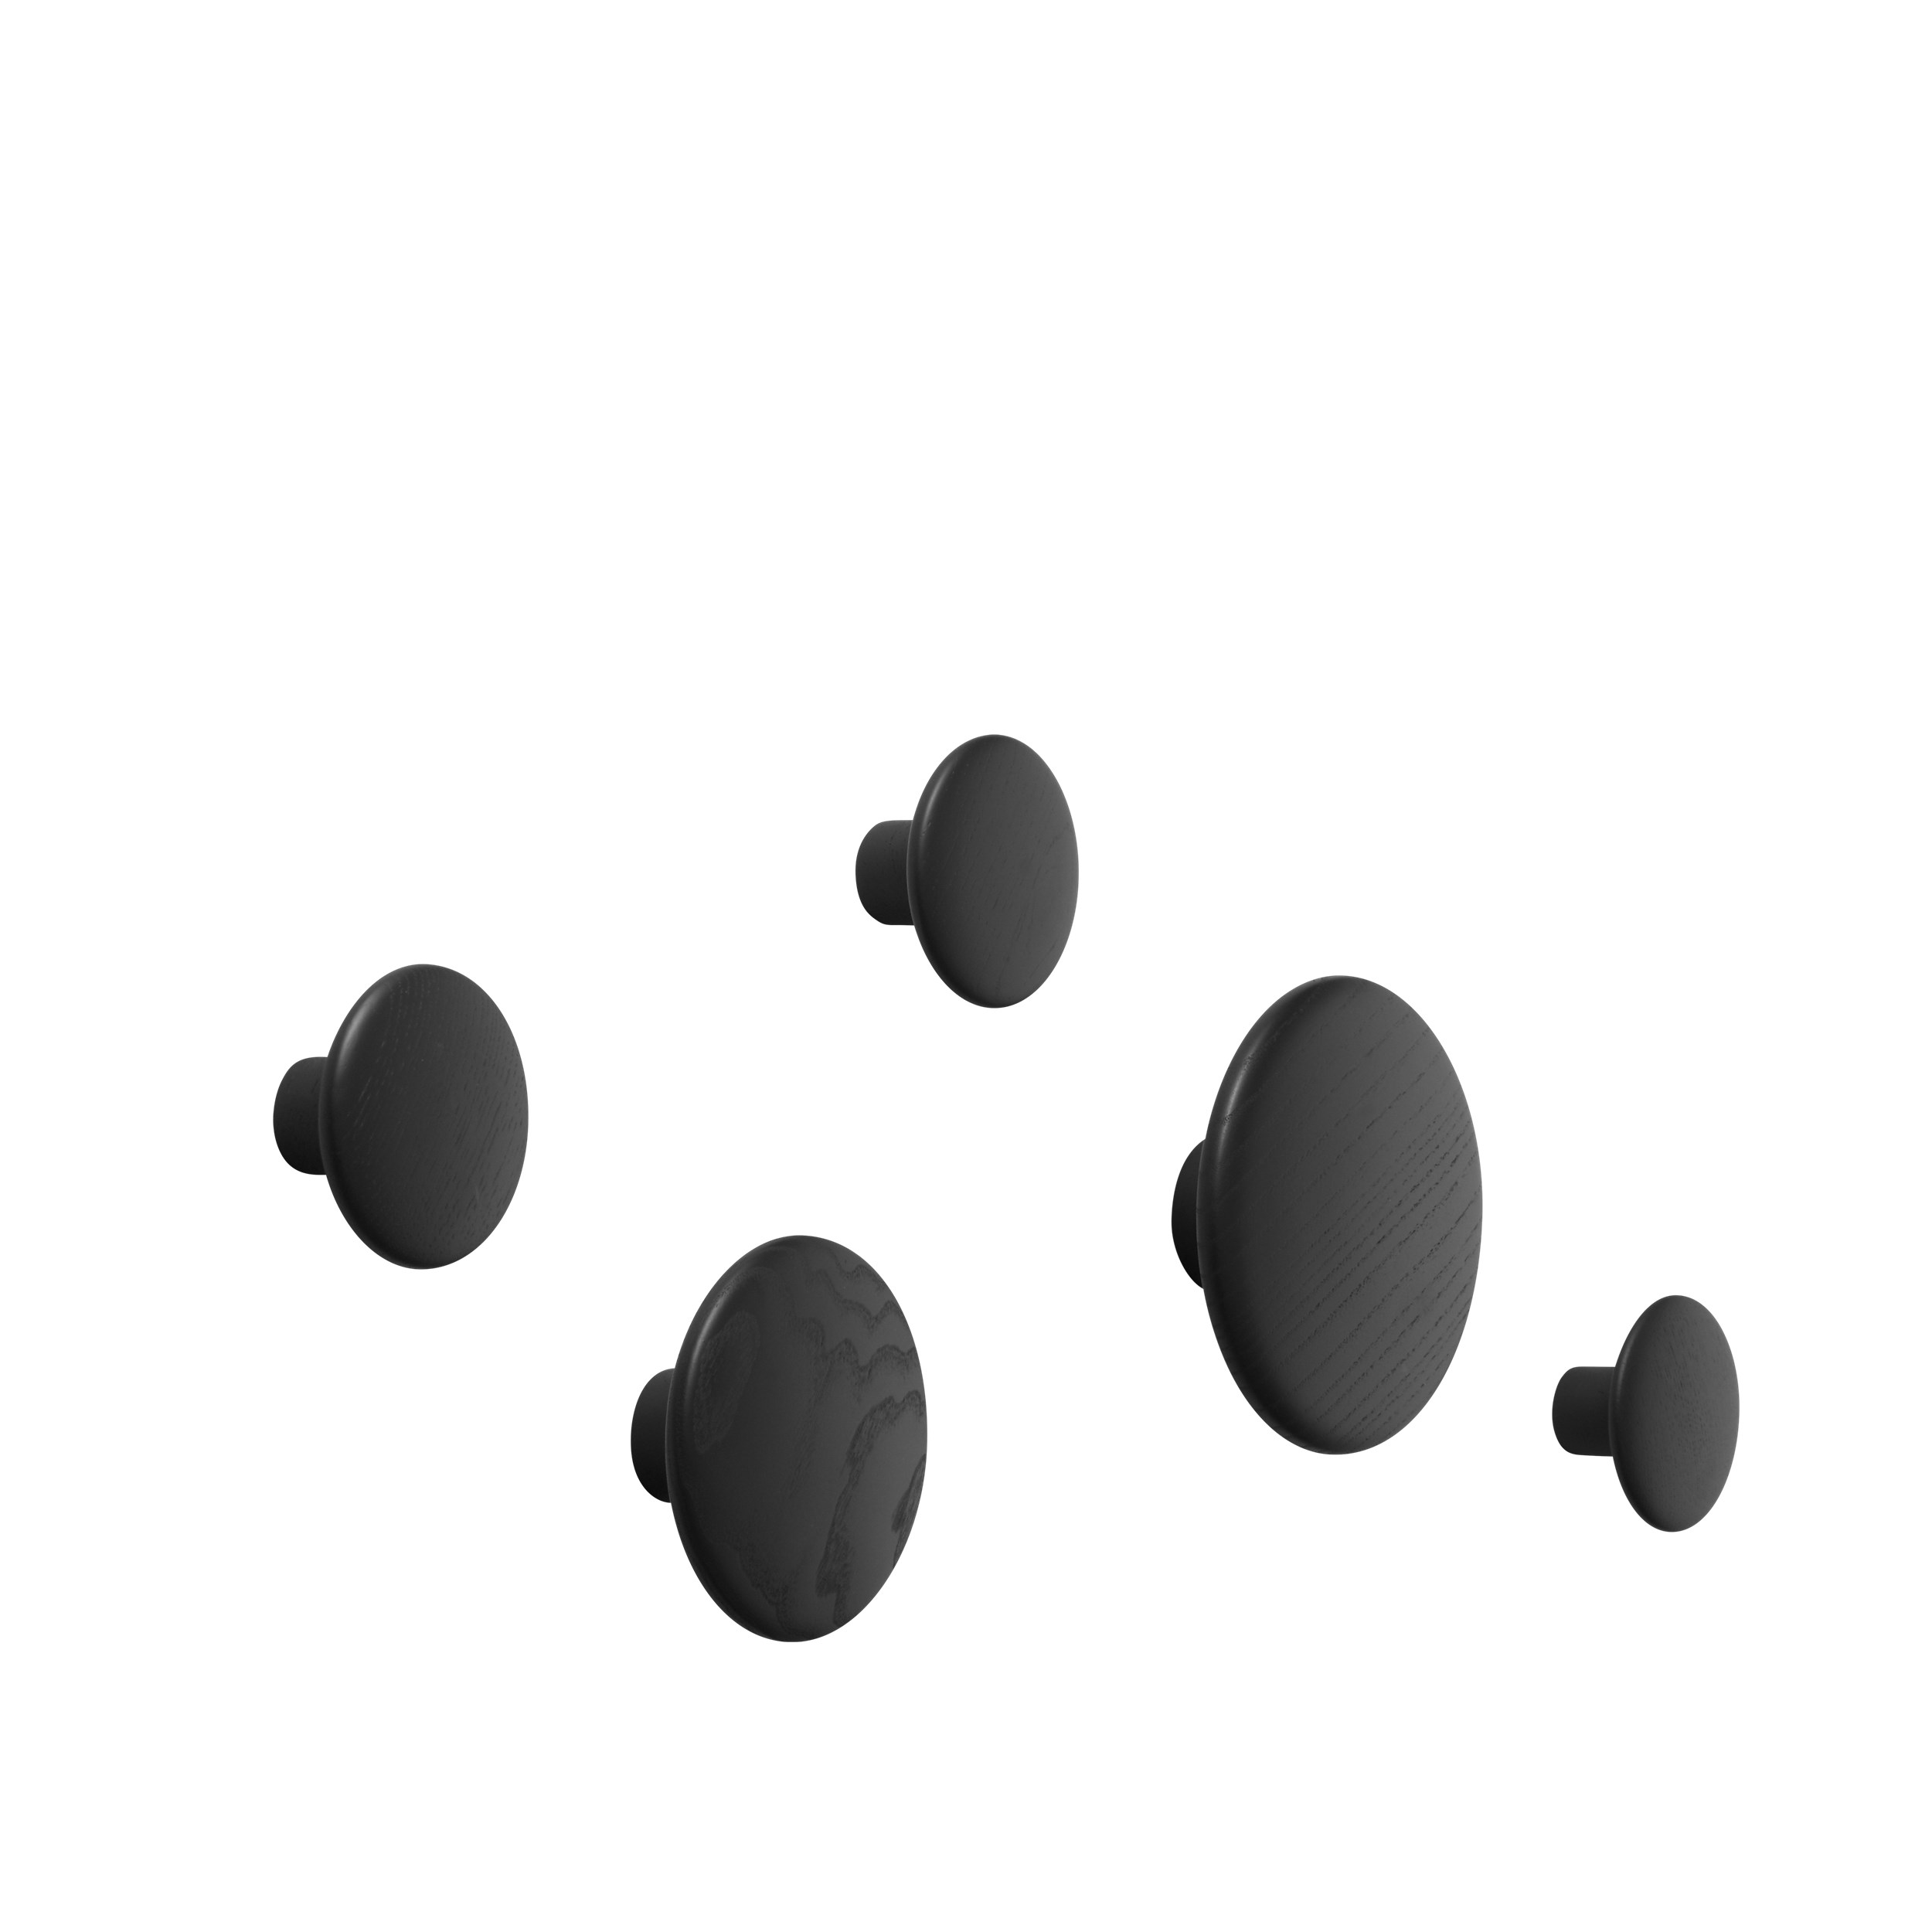 The dots set of 5 black